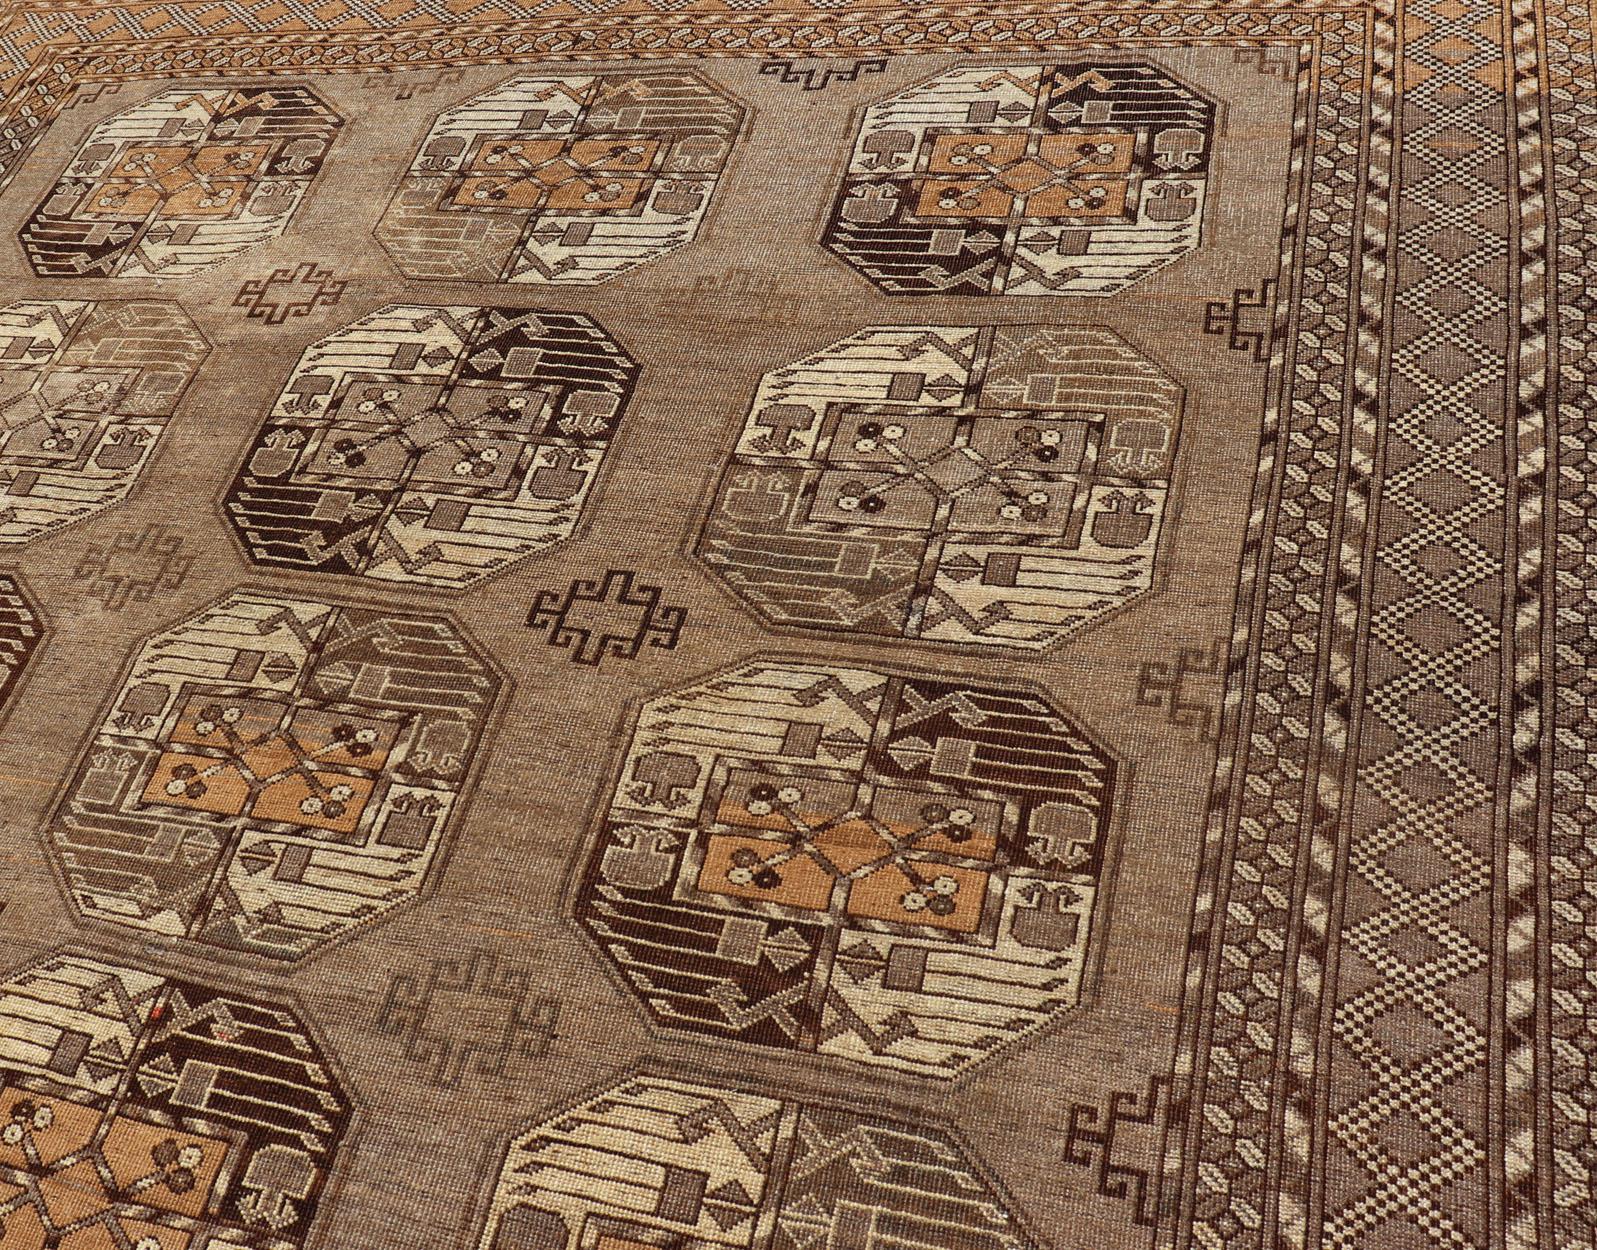 Hand-Knotted wool Turkomen Ersari Rug with Repeating Sub-Geometric Gul Design, Keivan Woven Arts; rug EMB-9646-P13546, country of origin / type: Turkestan / Ersari, circa 1940s.

Measures: 7'0 x 10'8.

This Turkomen Ersari rug has been hand-knotted